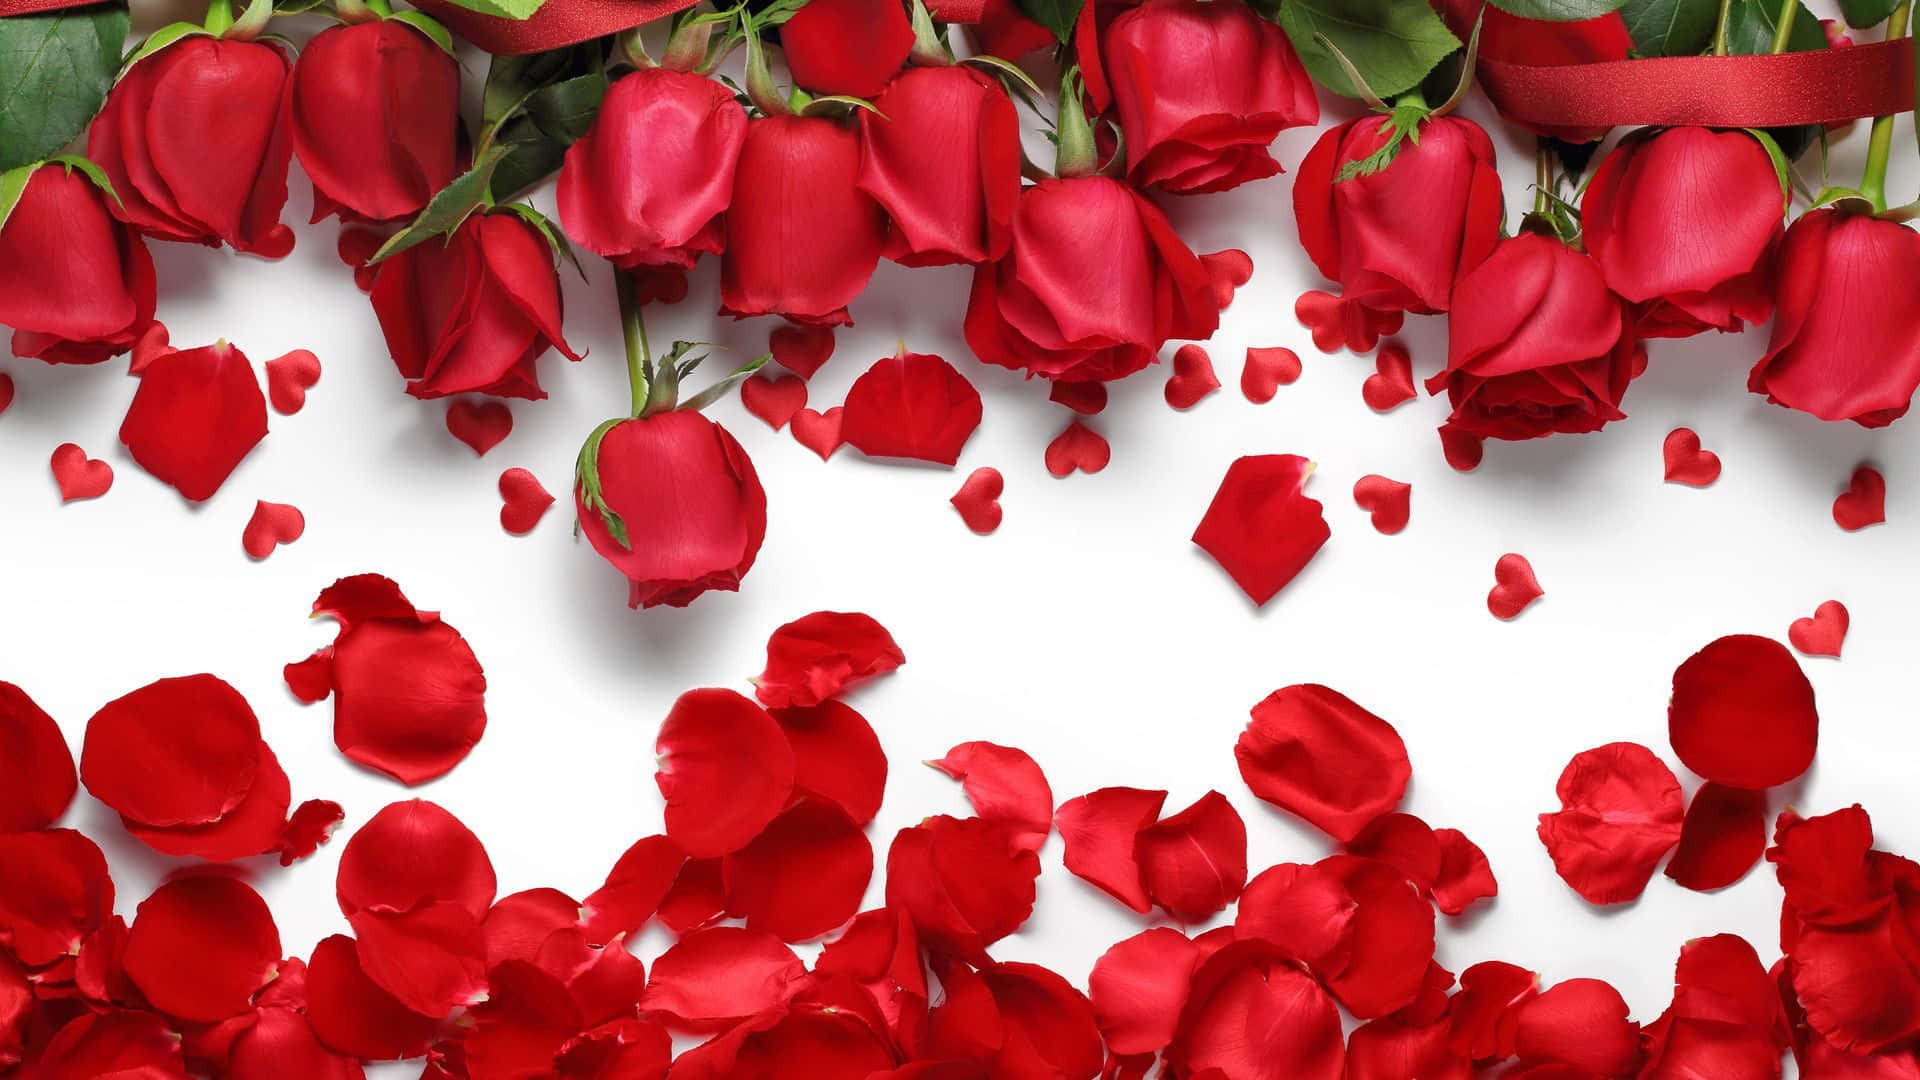 Vibrant Red Rose Petal Close-Up Wallpaper